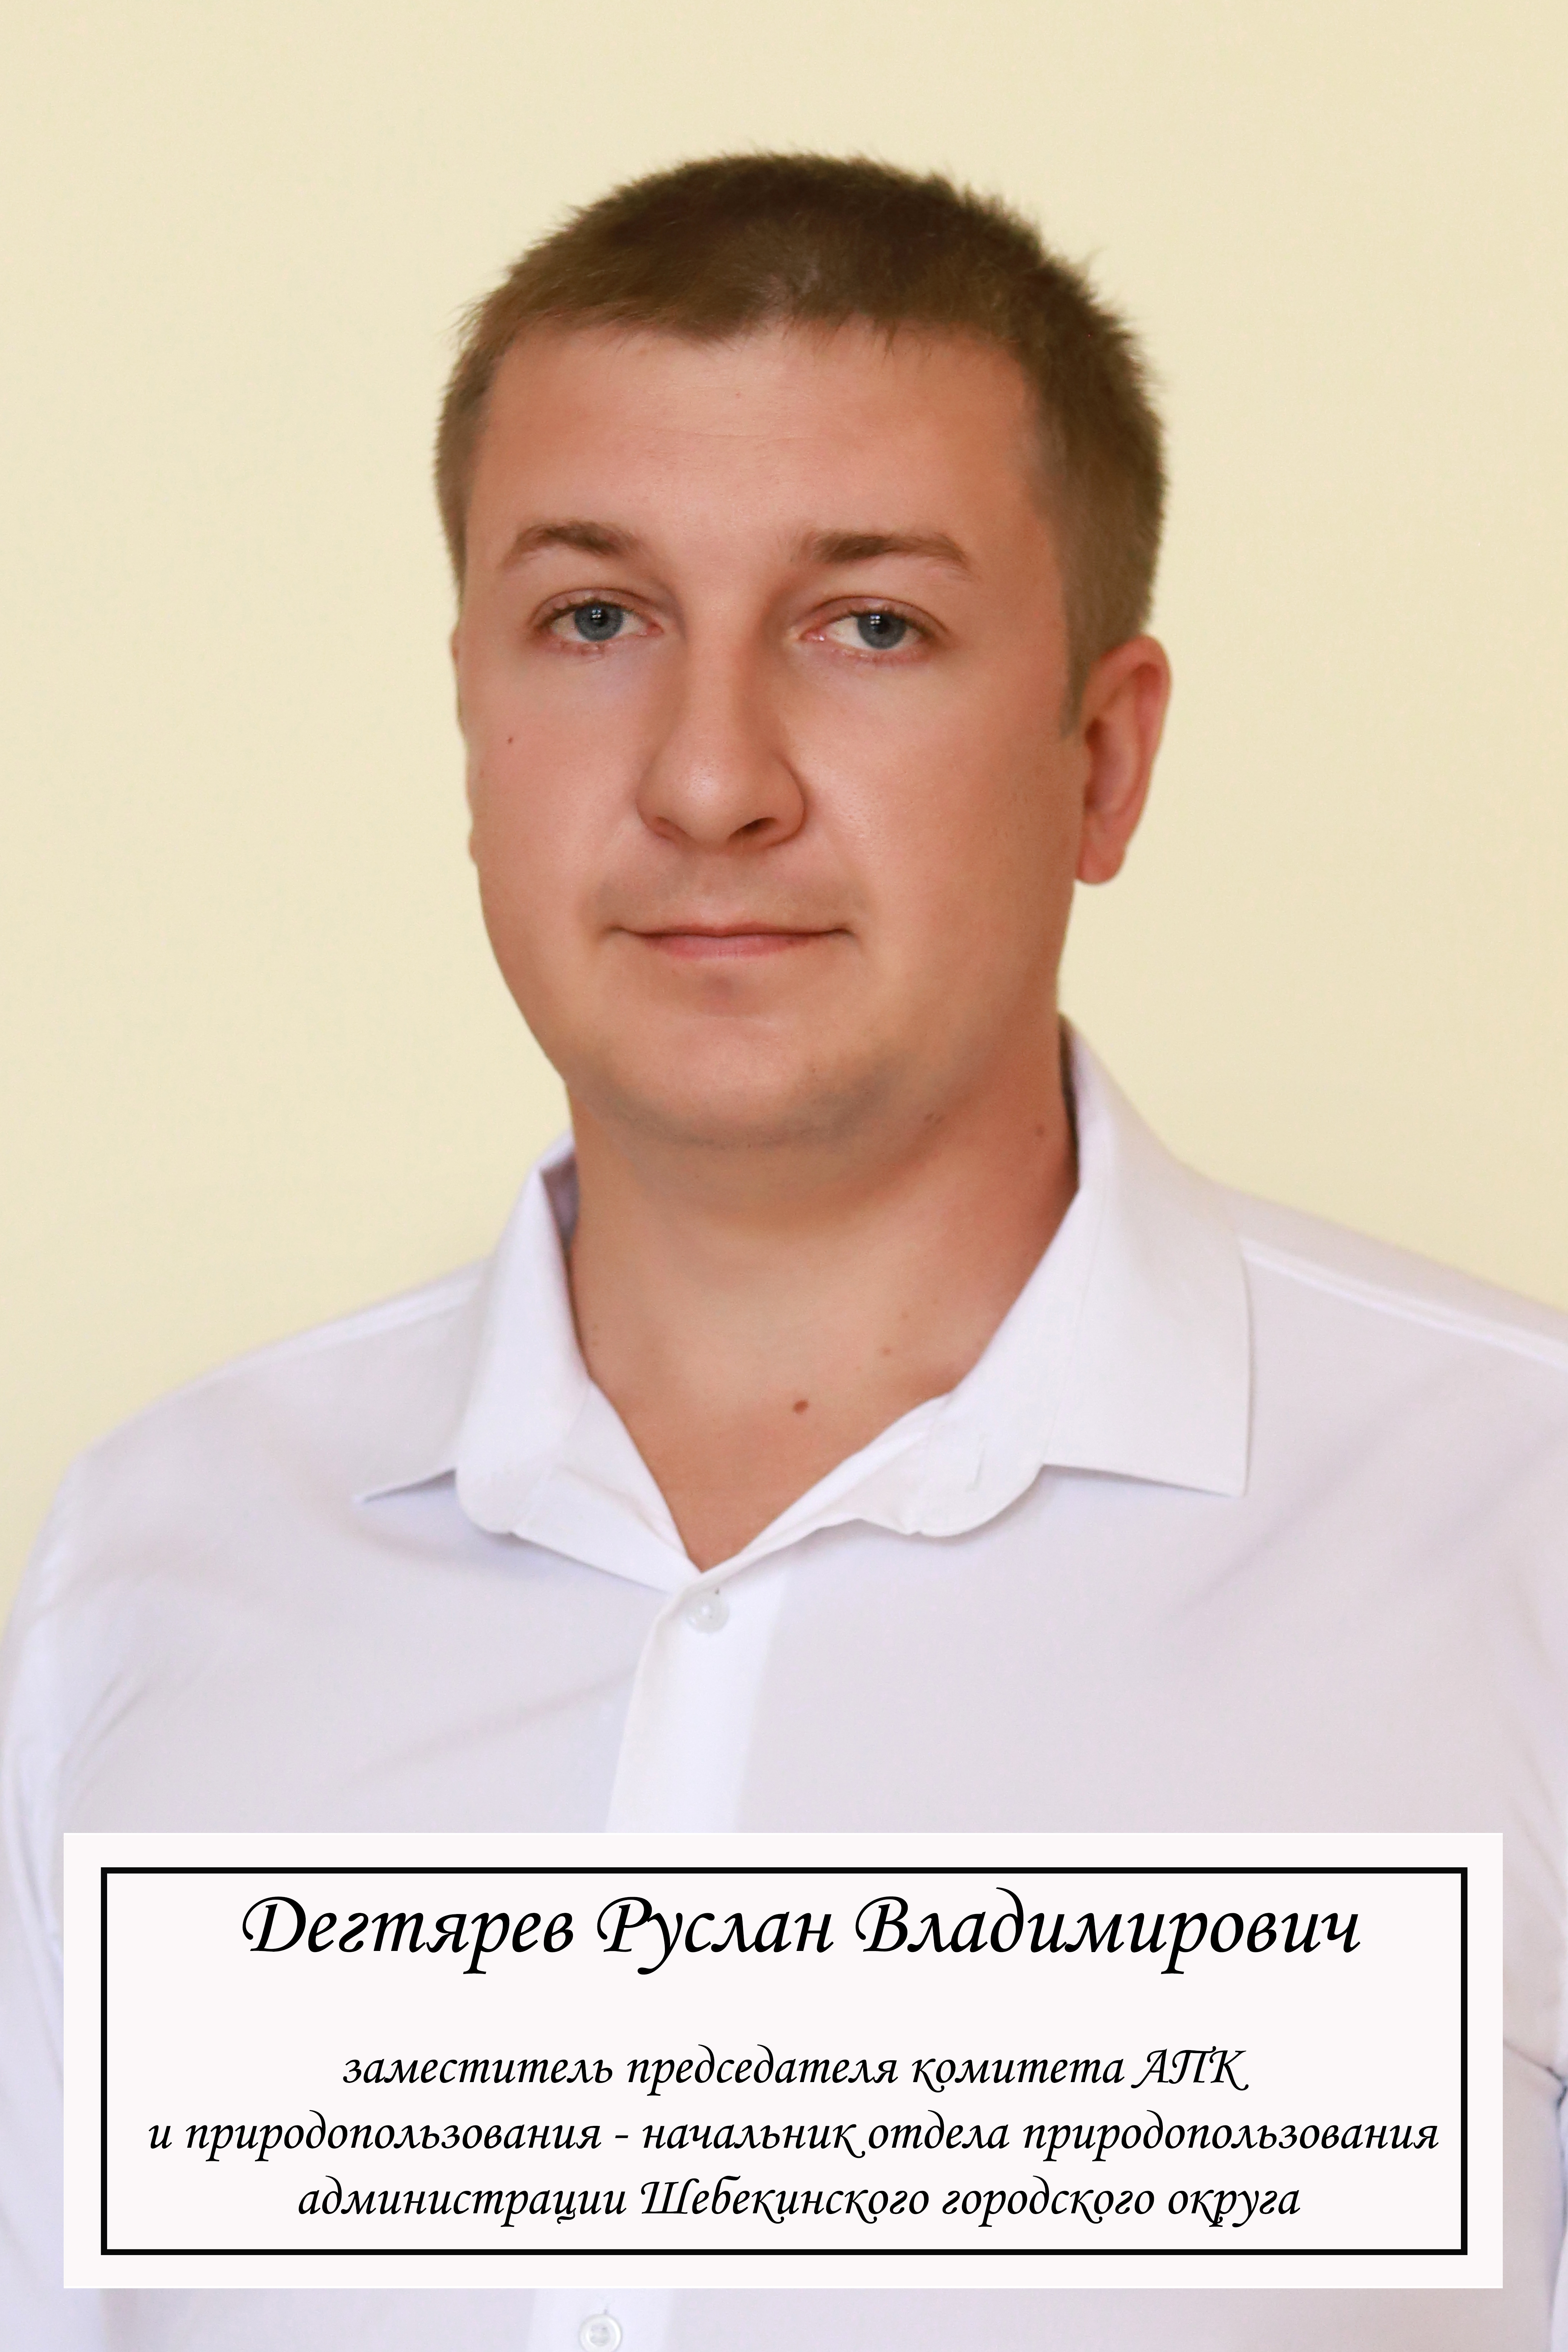 Дегтярев Руслан Владимирович.